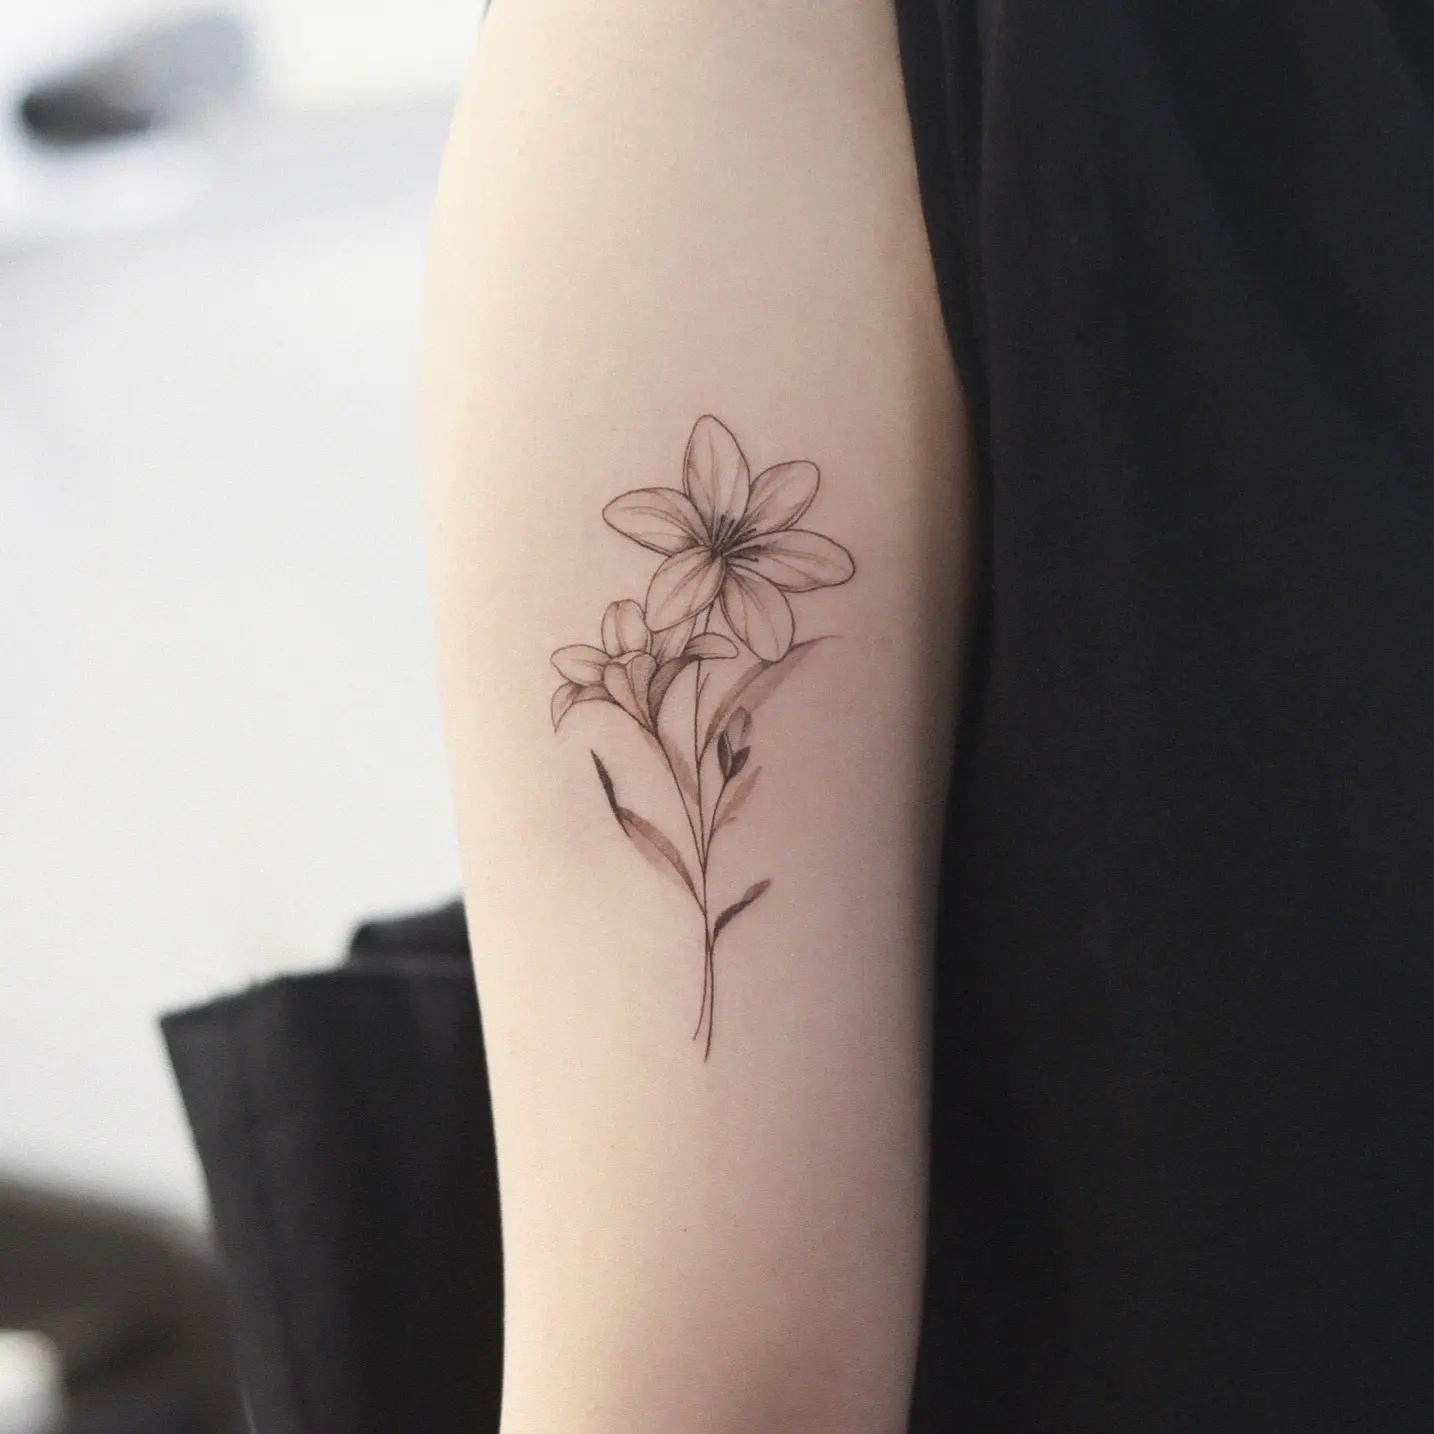 Black and White Jasmine Flower Tattoo on Arm